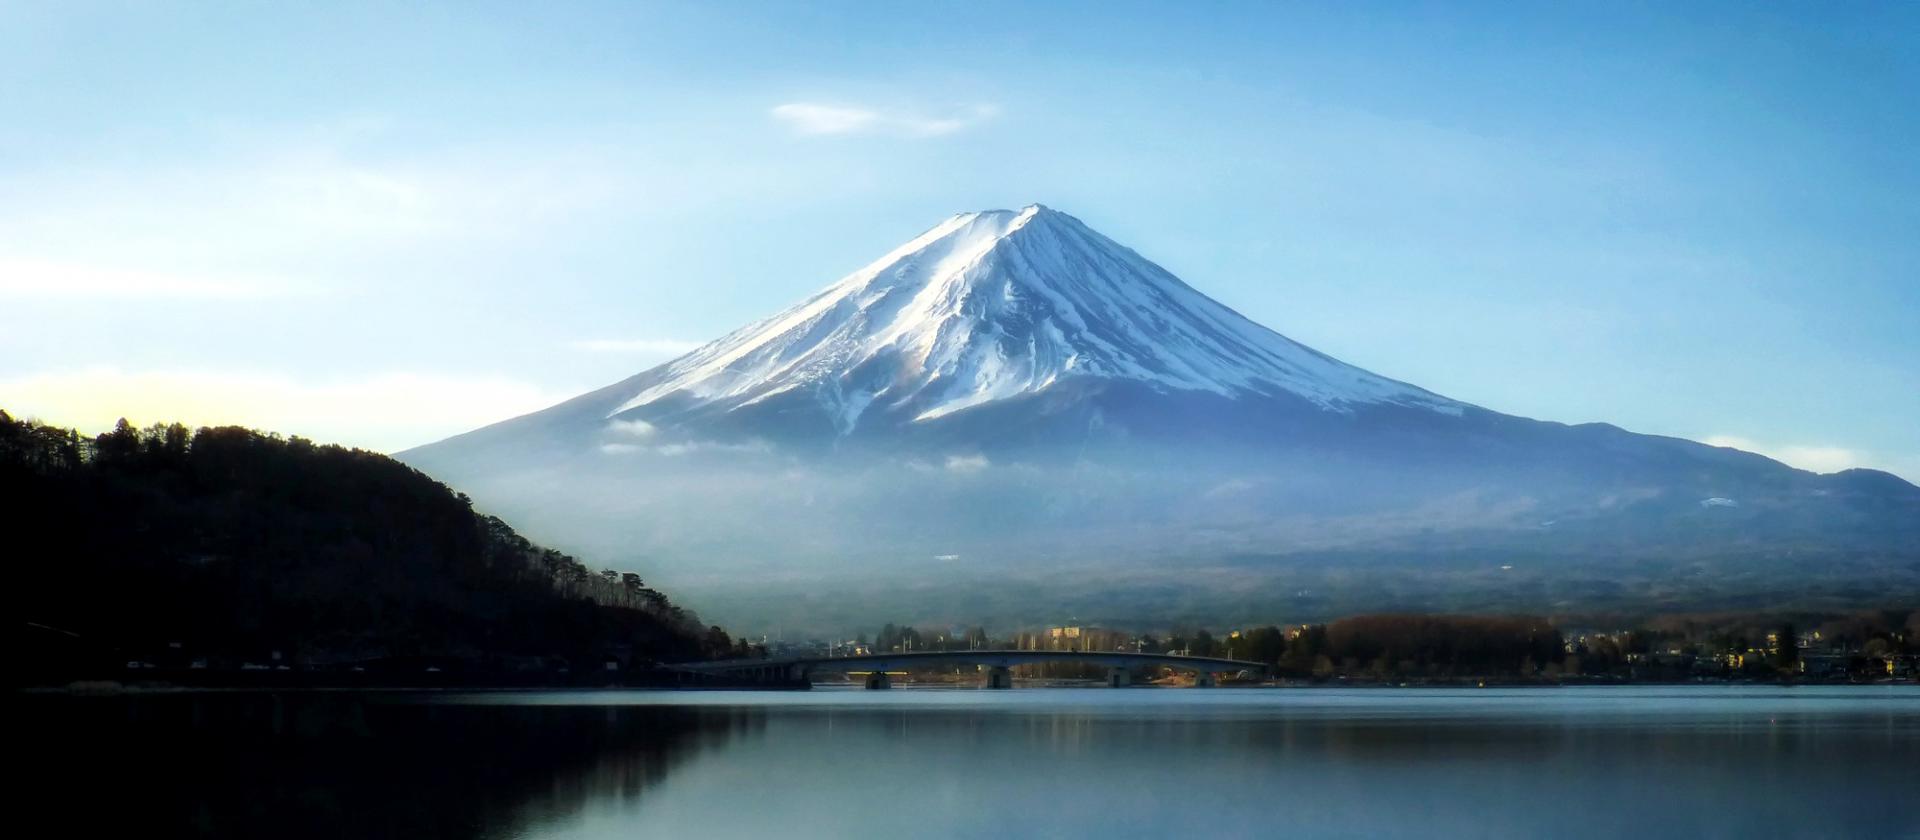 Góra Fudżi